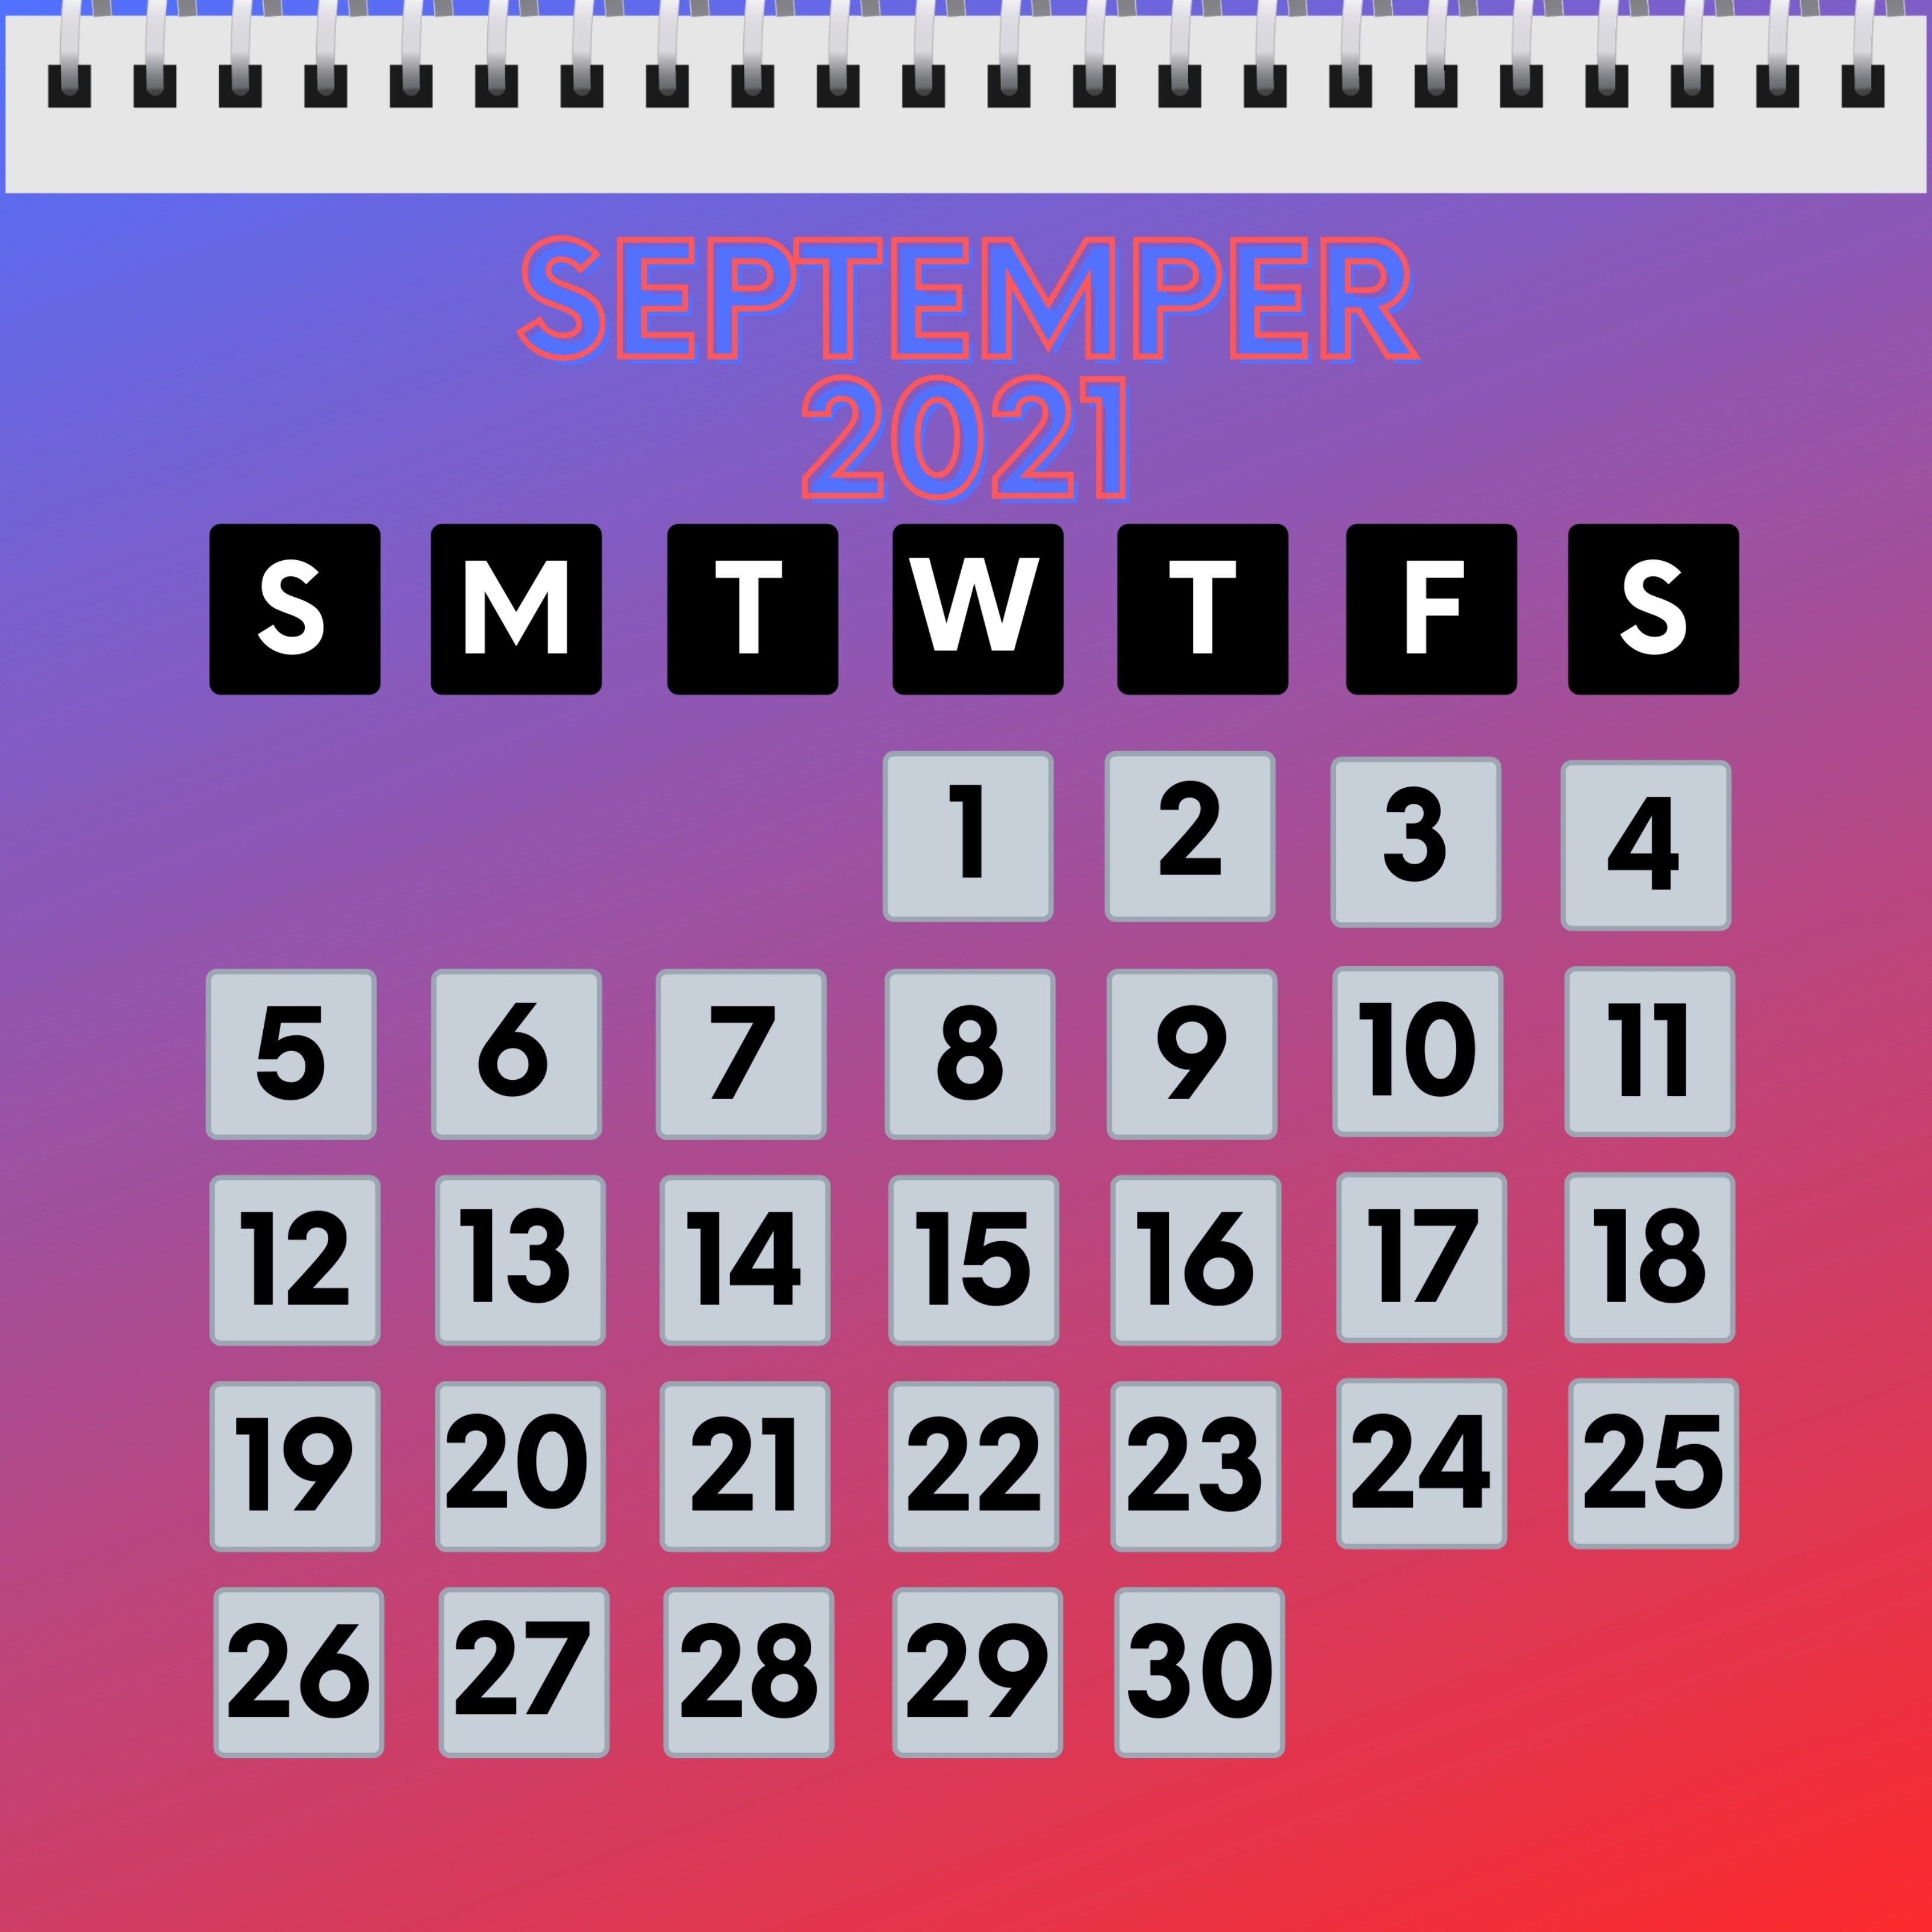 iPad Wallpapers September 2021 Calendar iPad Wallpaper 3208x3208 px